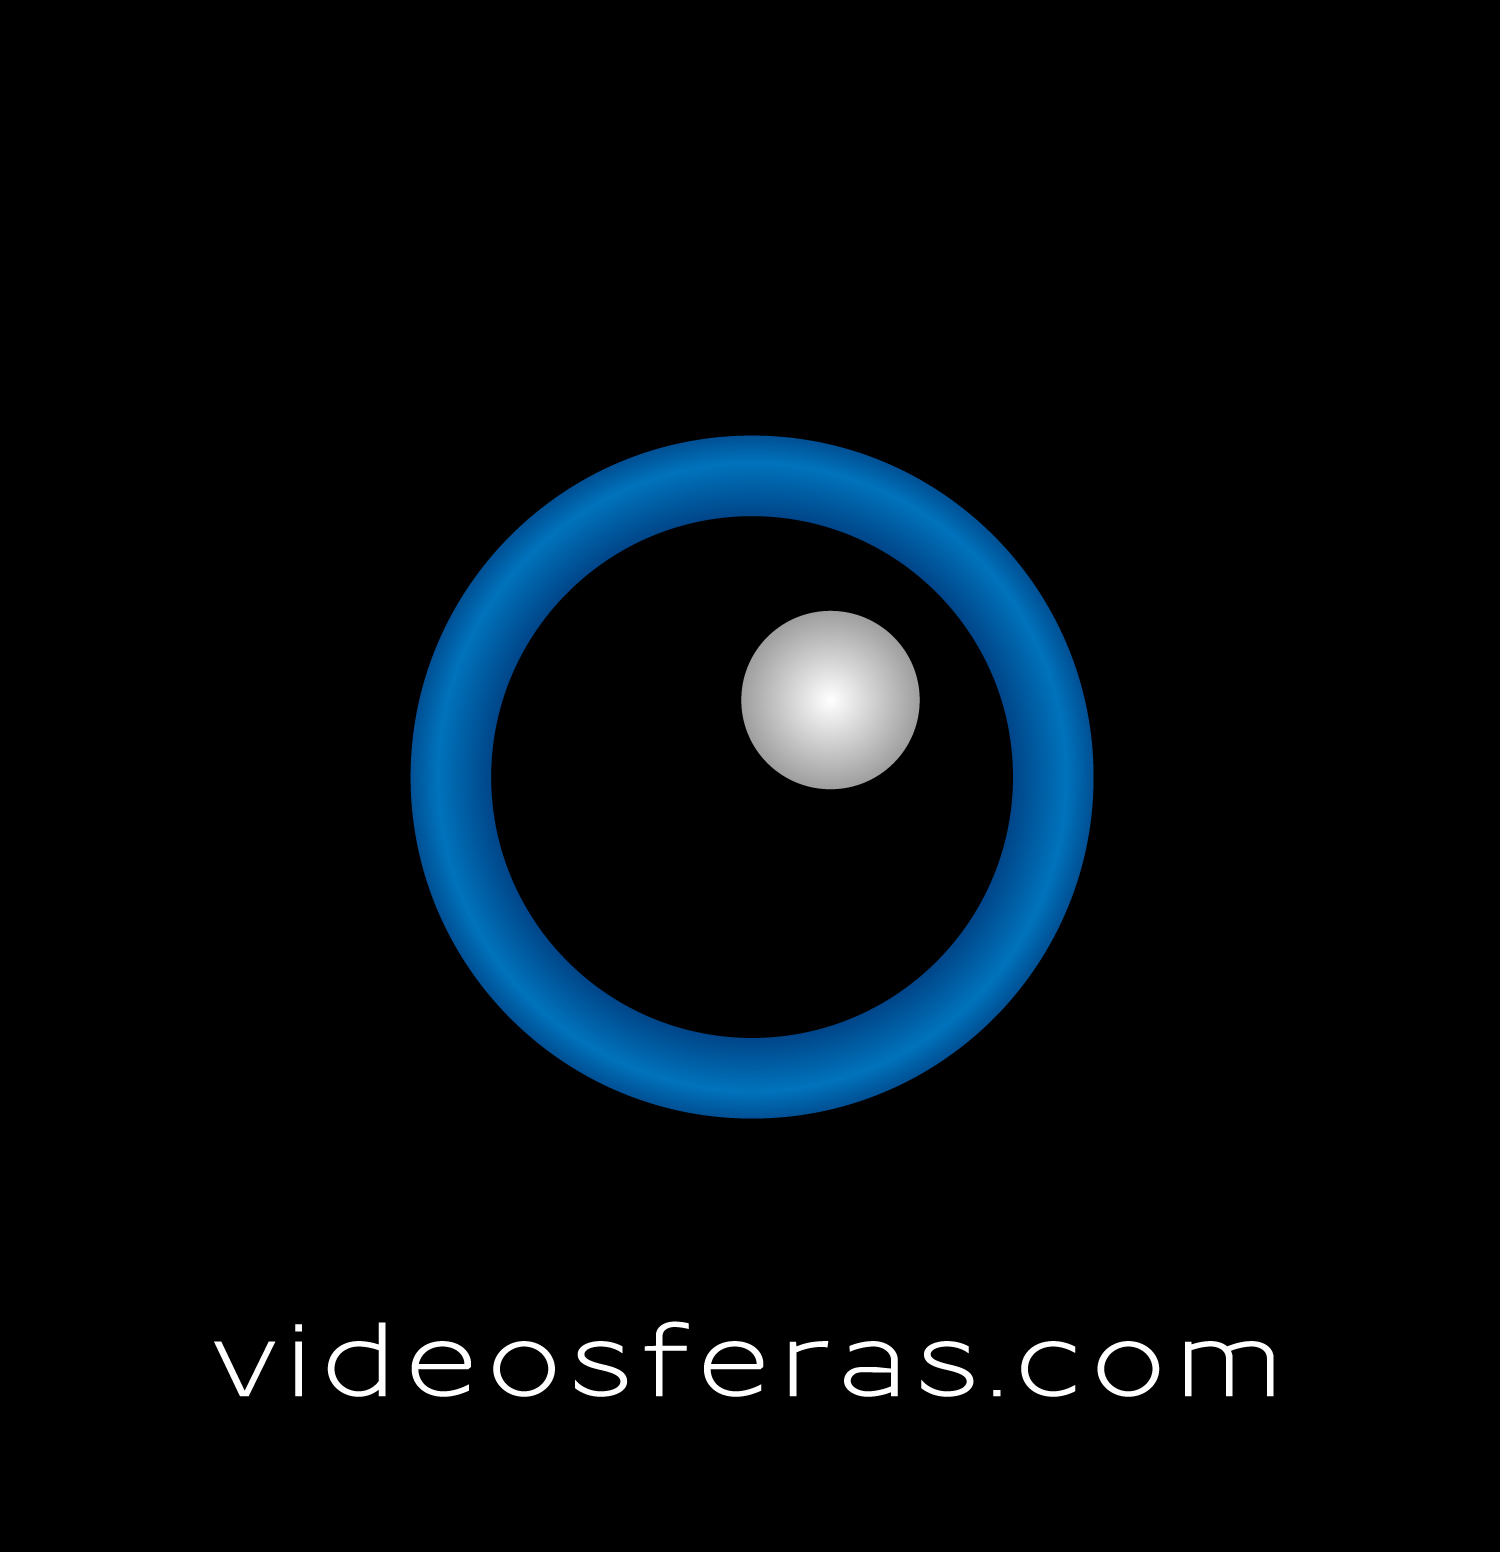 (c) Videosferas.com